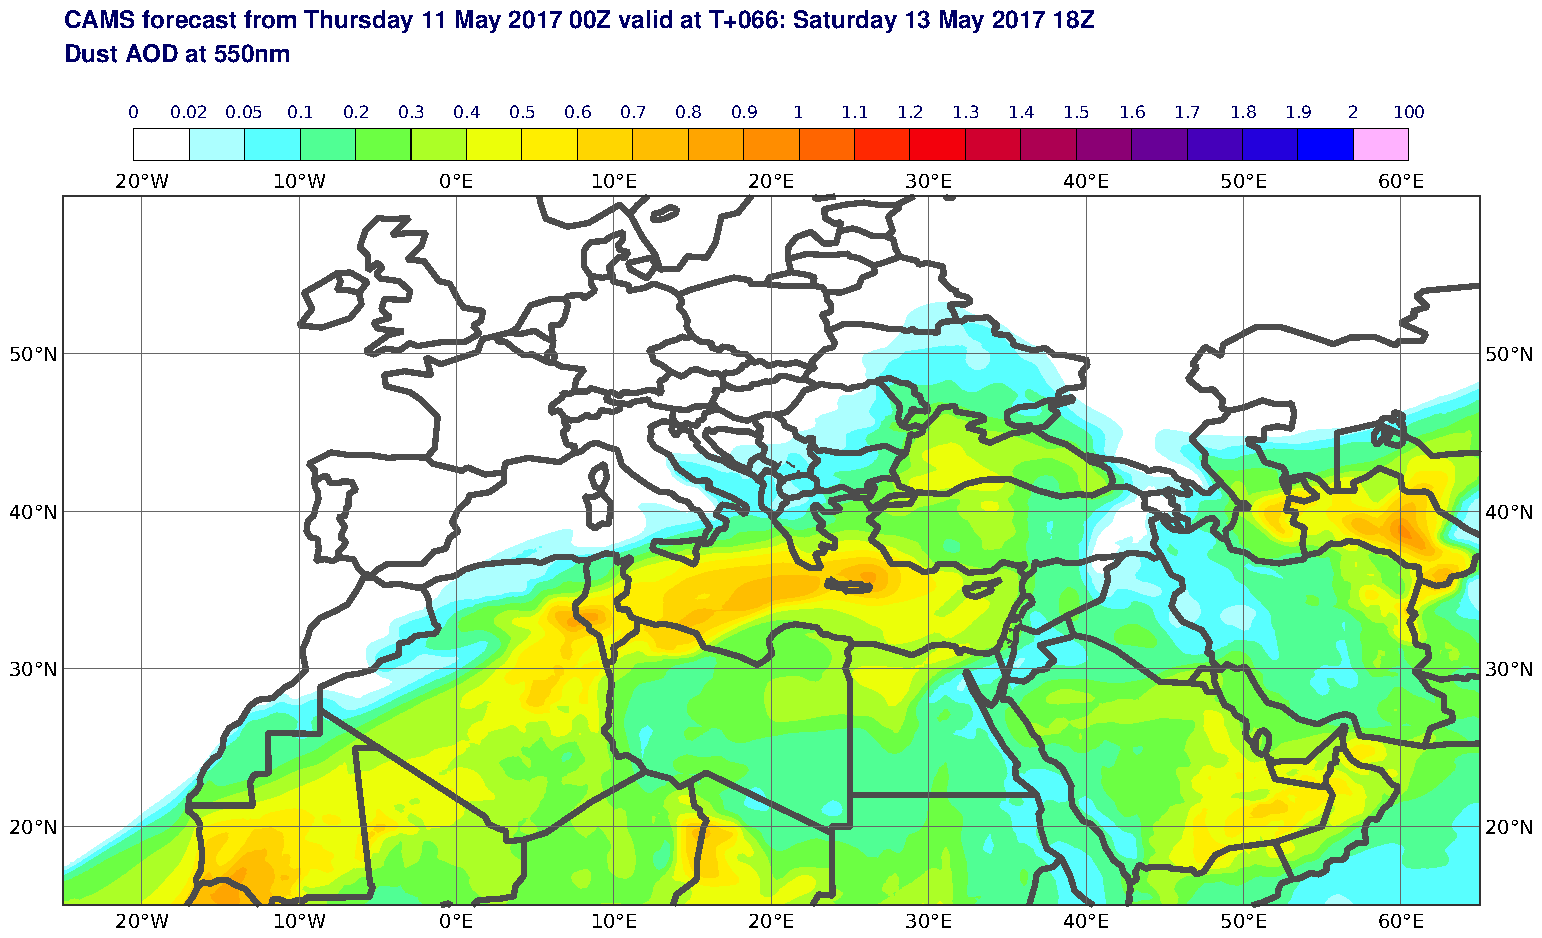 Dust AOD at 550nm valid at T66 - 2017-05-13 18:00